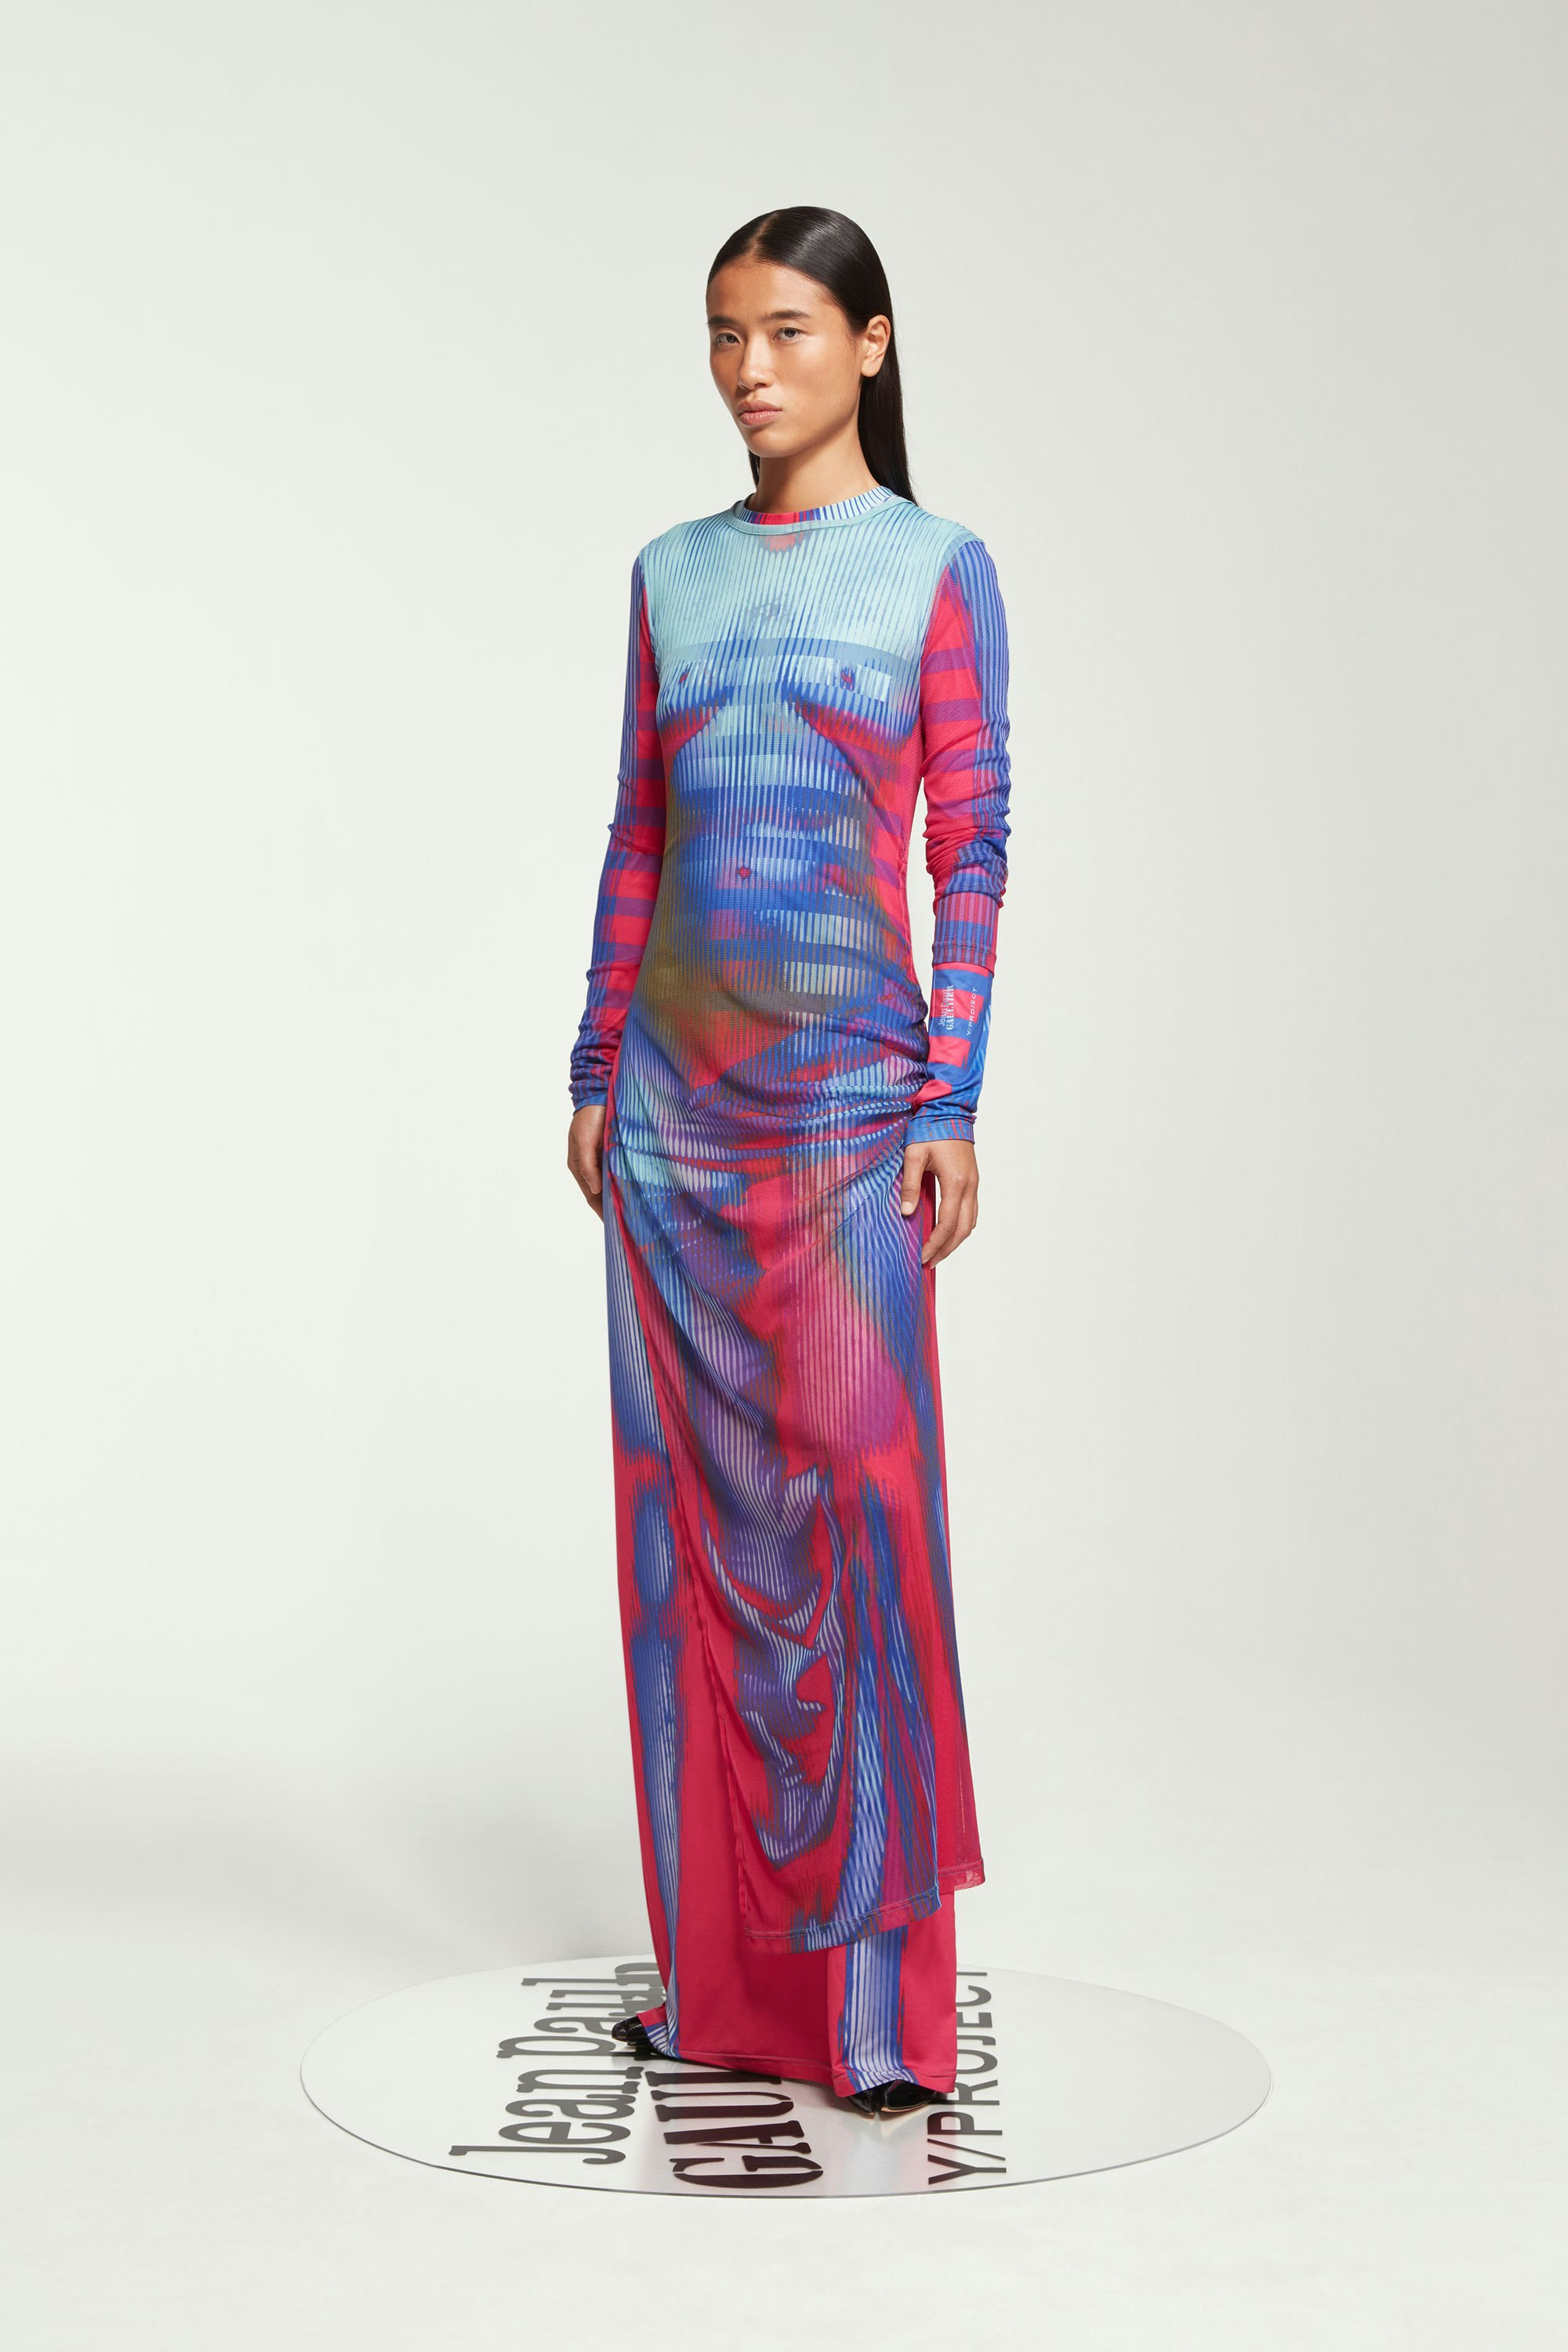 The Pink & Blue Body Morph Long Dress by Jean Paul Gaultier x Y/Project